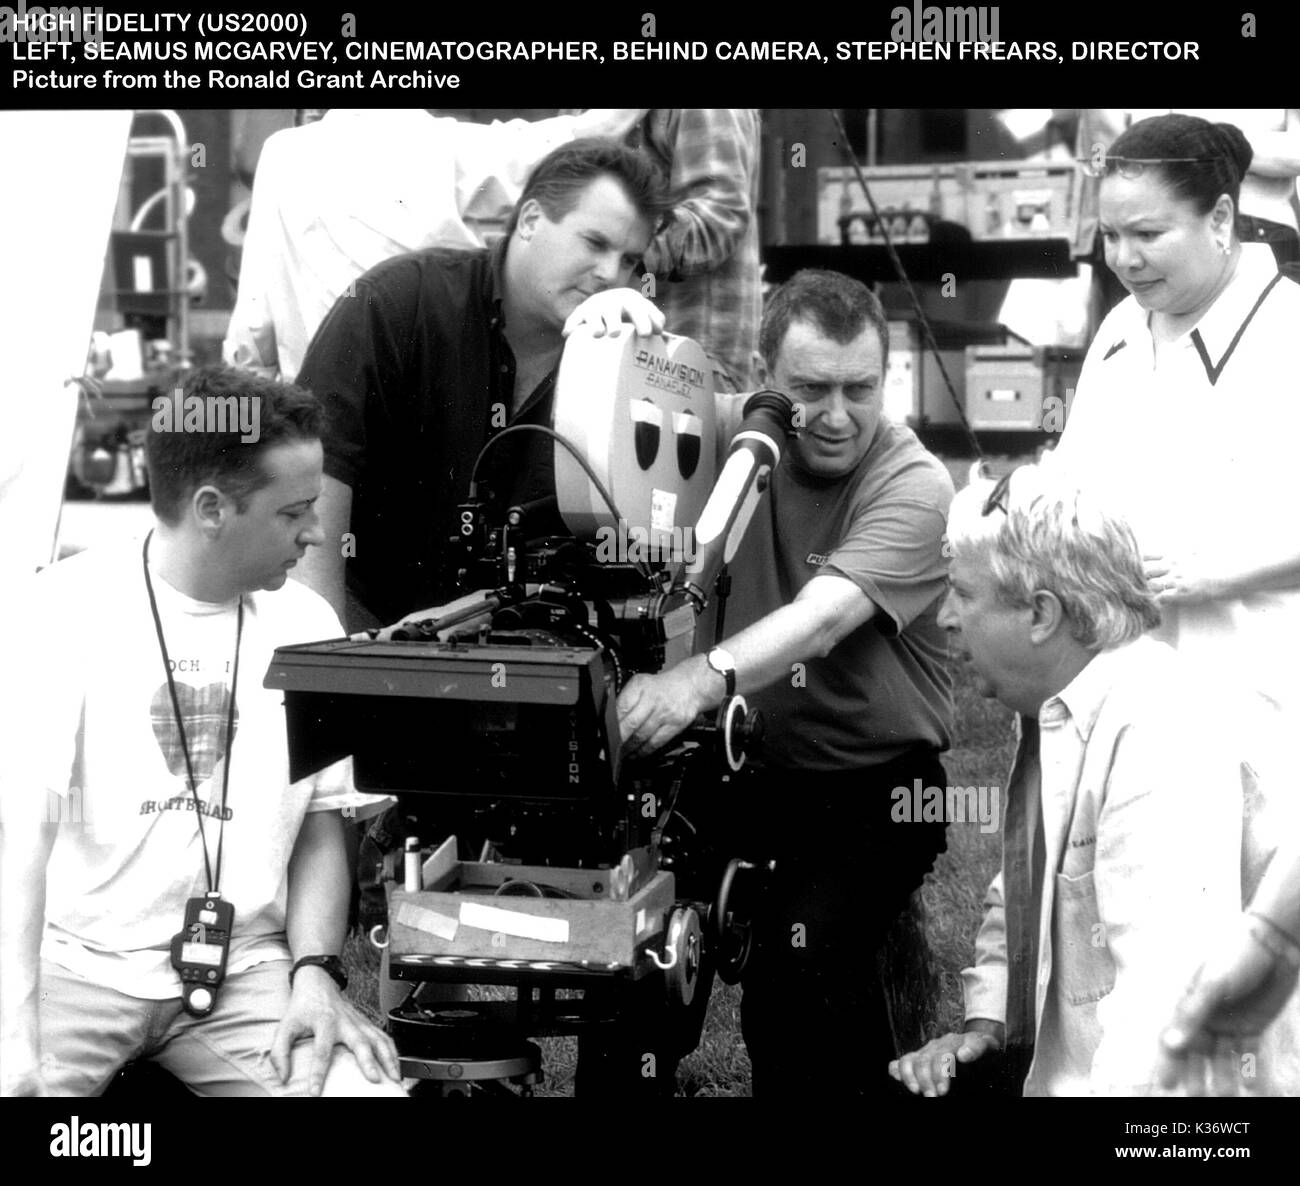 HIGH FIDELITY director STEPHEN FREARS, cinematographer SEAMUS MCGARVEY     Date: 2000 Stock Photo